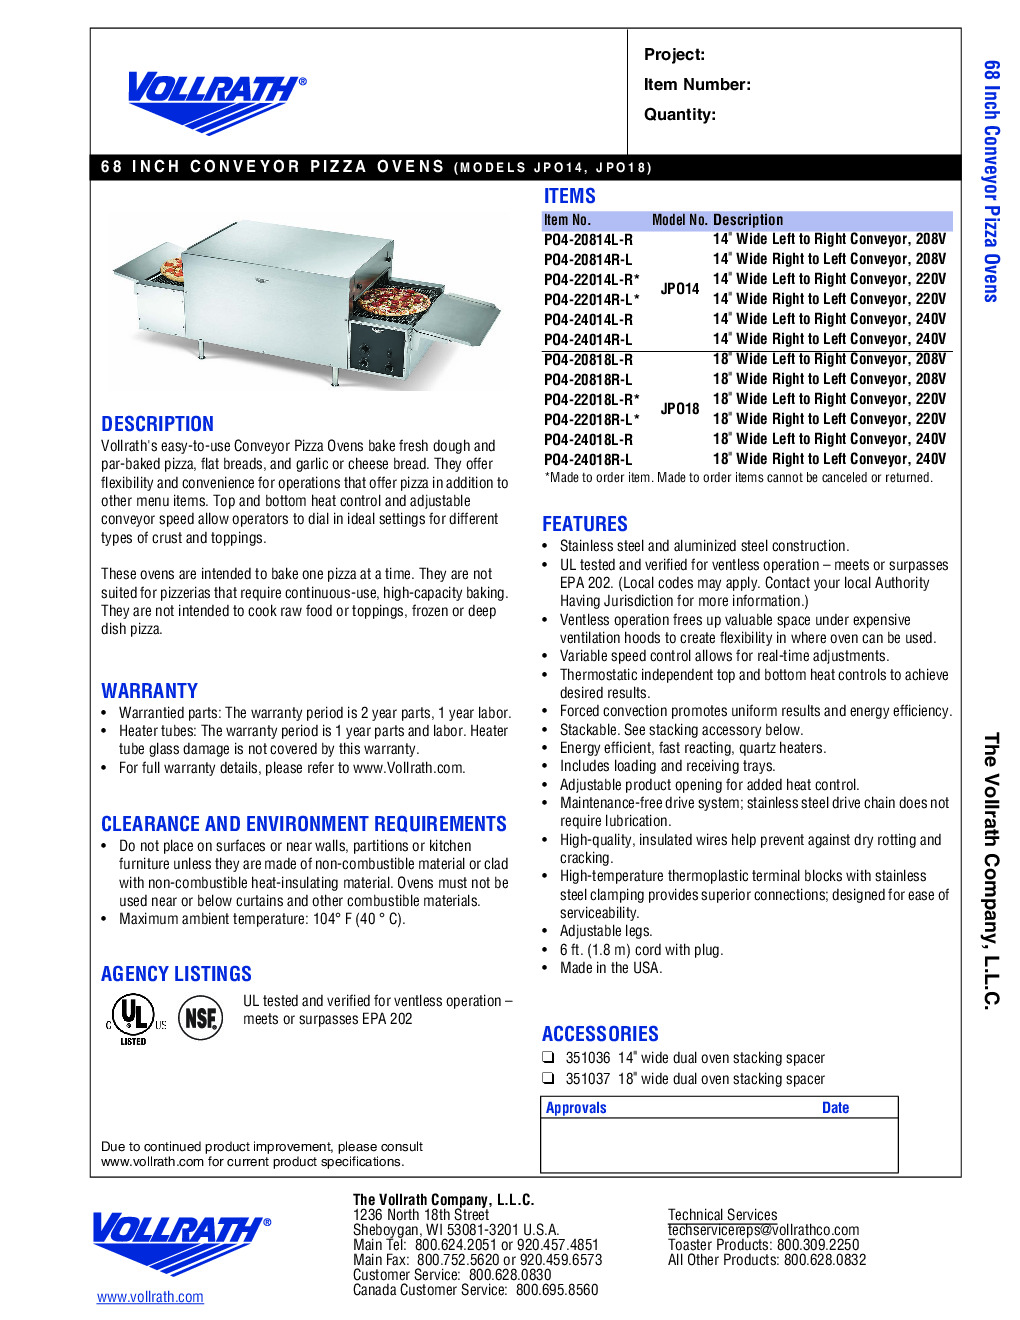 Vollrath PO4-22018R-L Countertop Electric Conveyor Oven, (1) 18